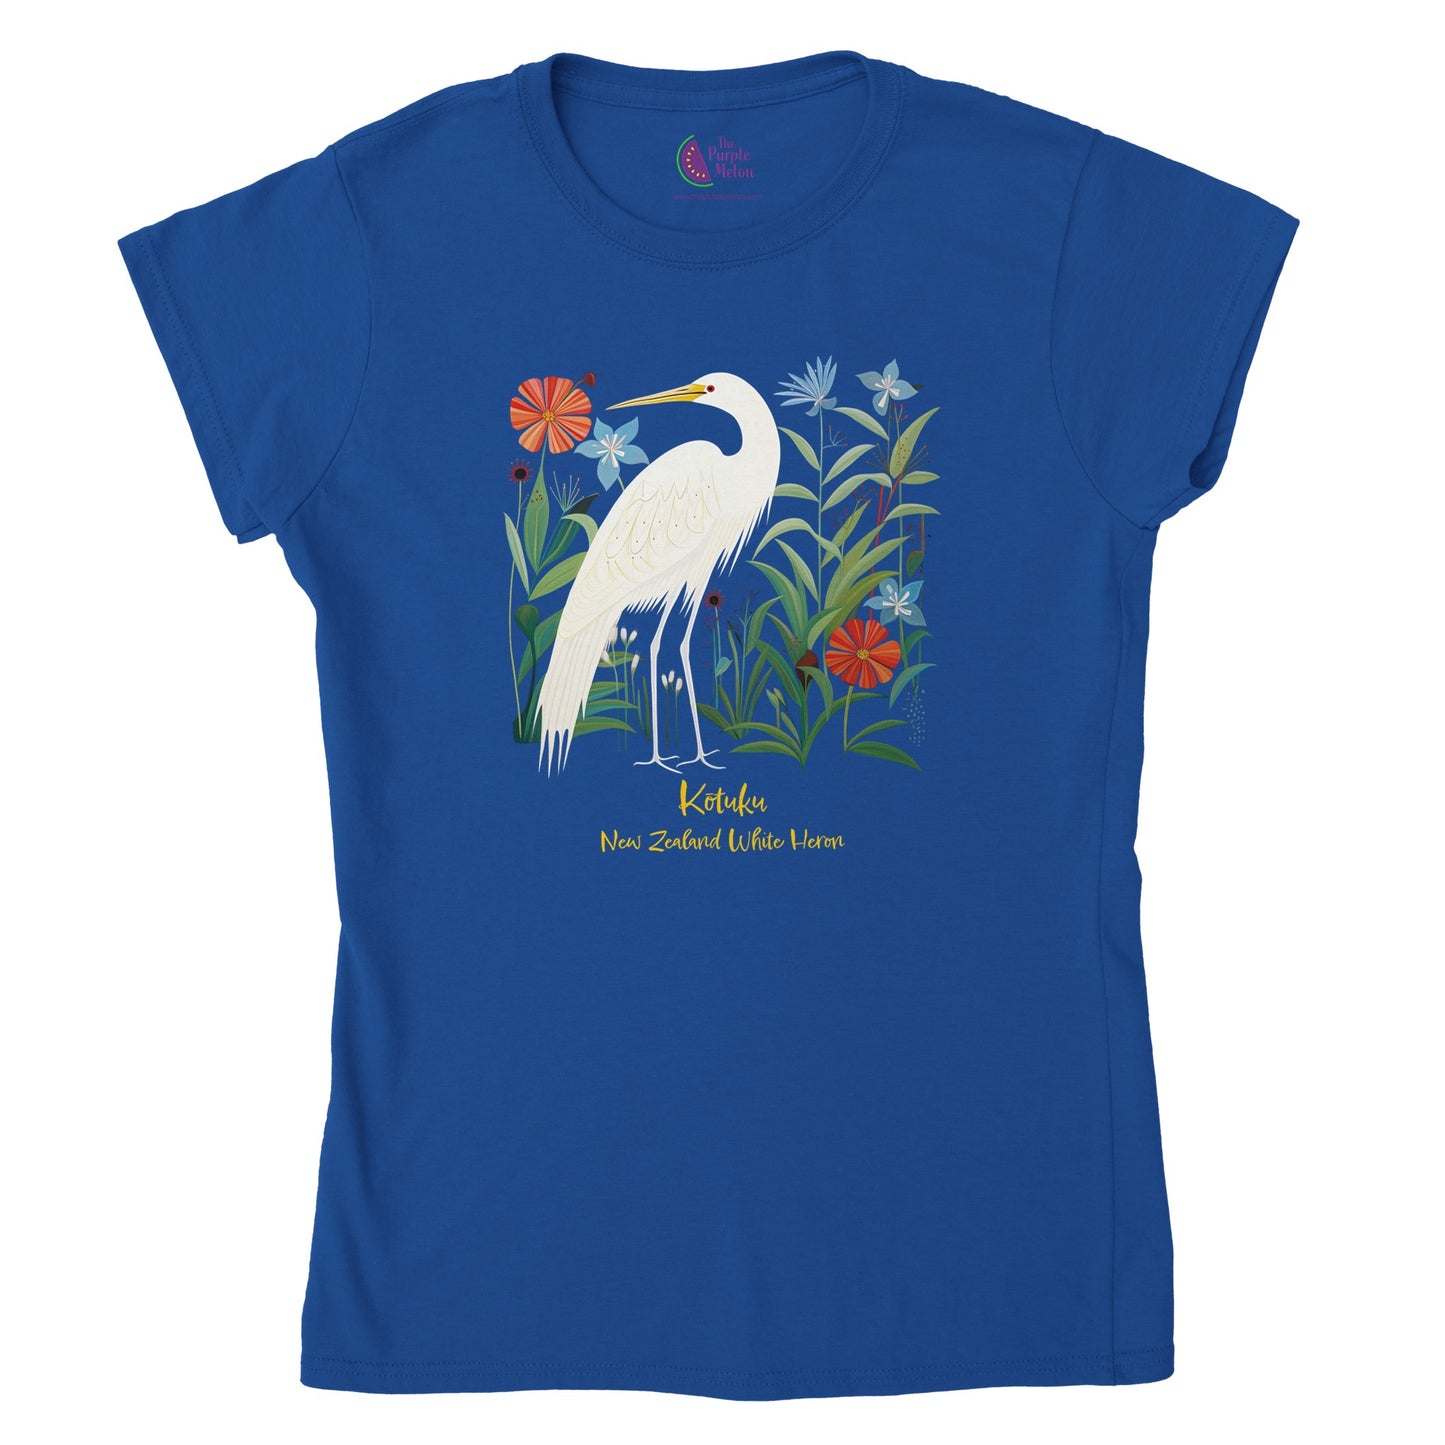 Royal blue t-shirt with a New Zealand Kōtuku white heron print